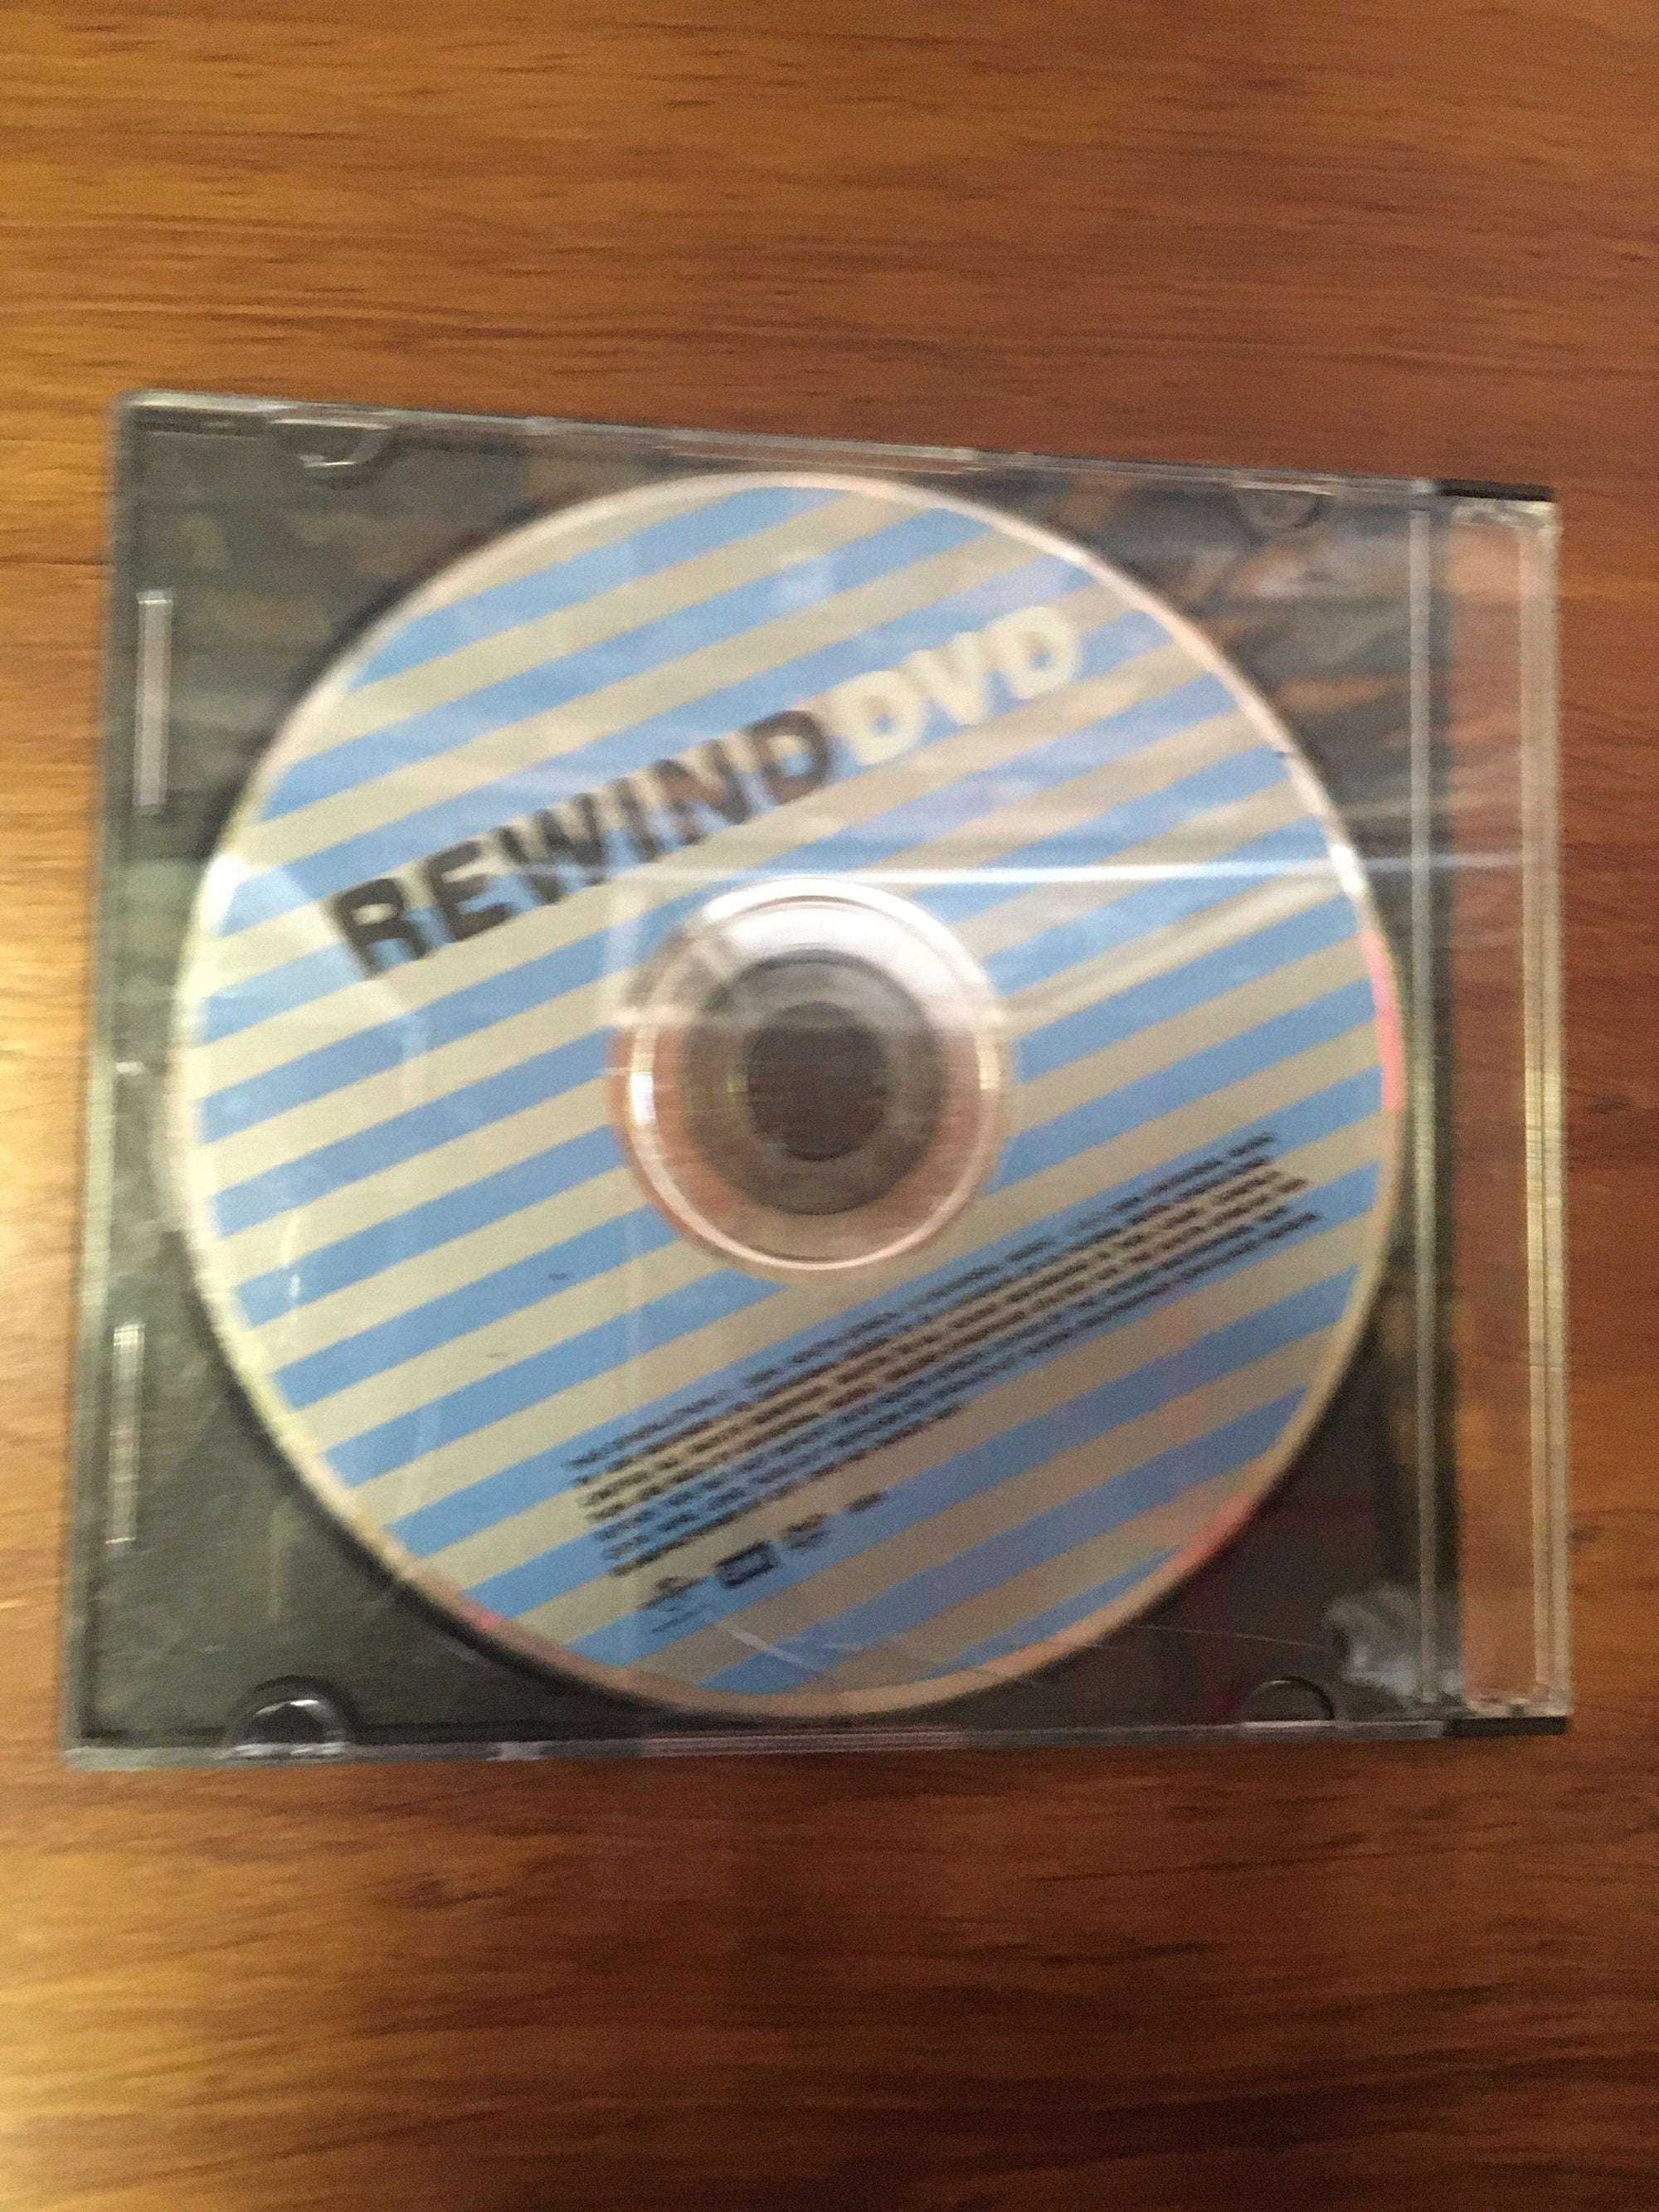 Rewind - DVD - 2ndhandwarehouse.com